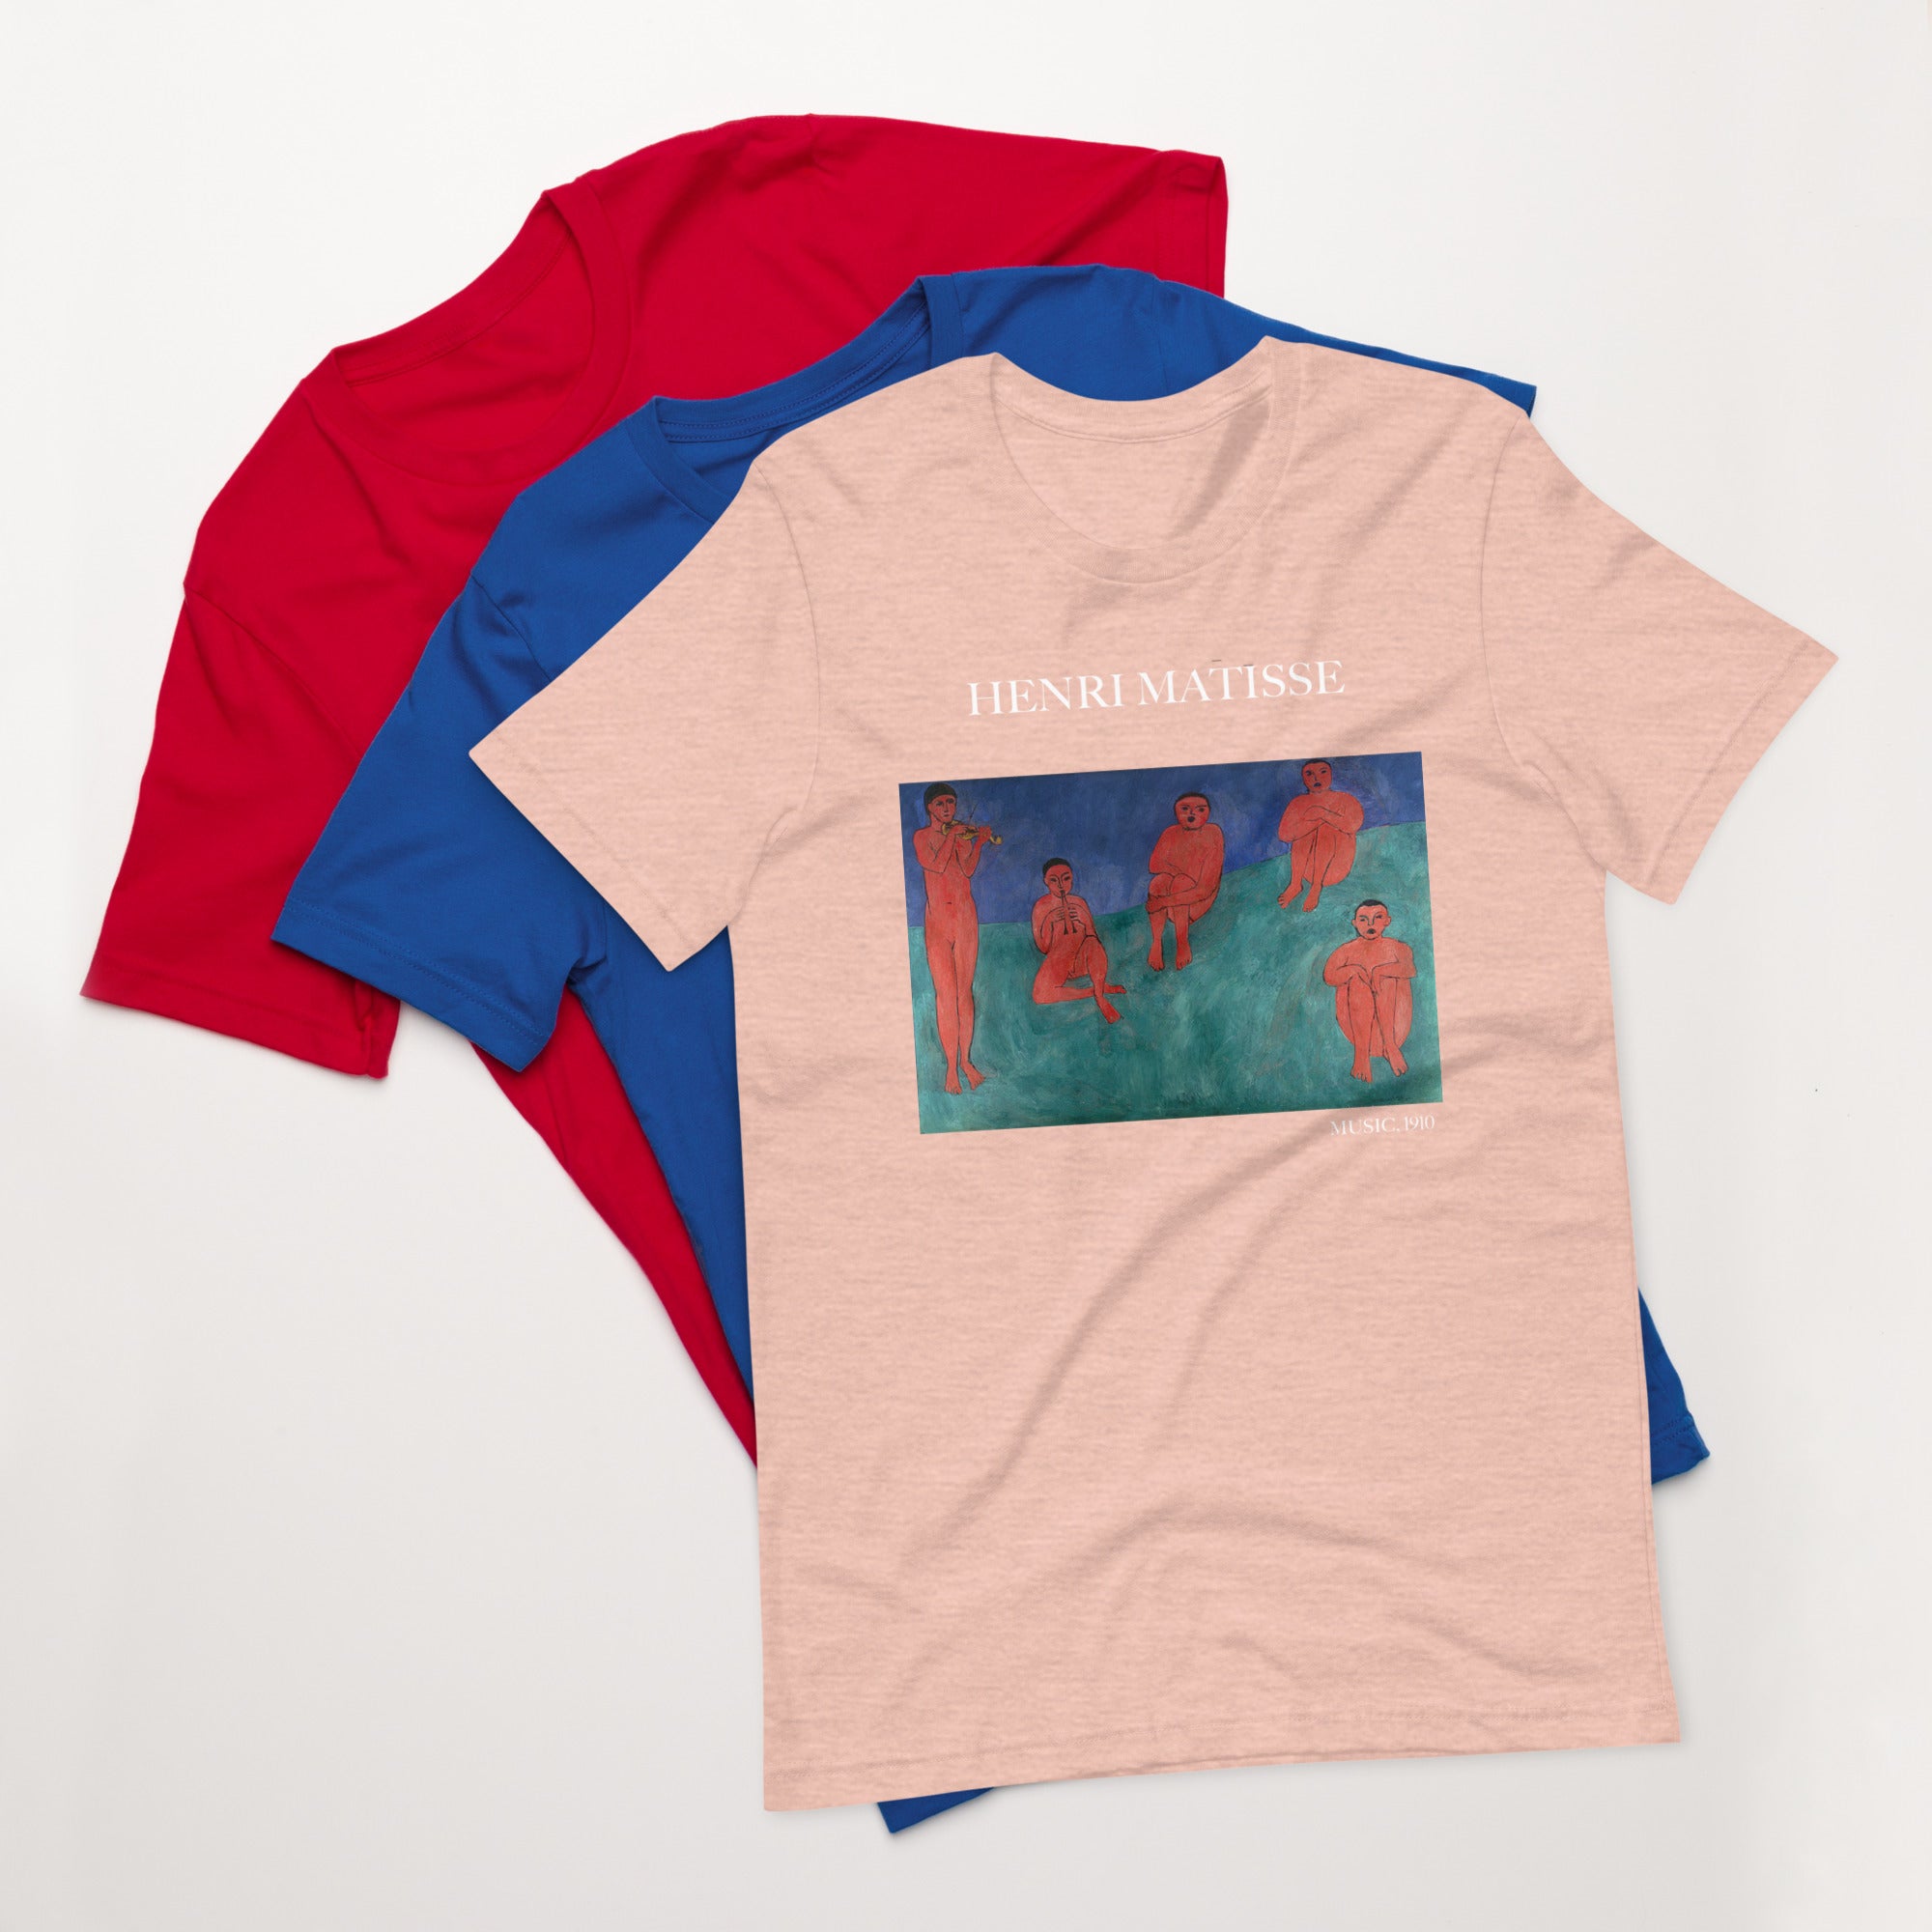 Henri Matisse T-Shirt „Musik“, berühmtes Gemälde, Unisex, klassisches Kunst-T-Shirt